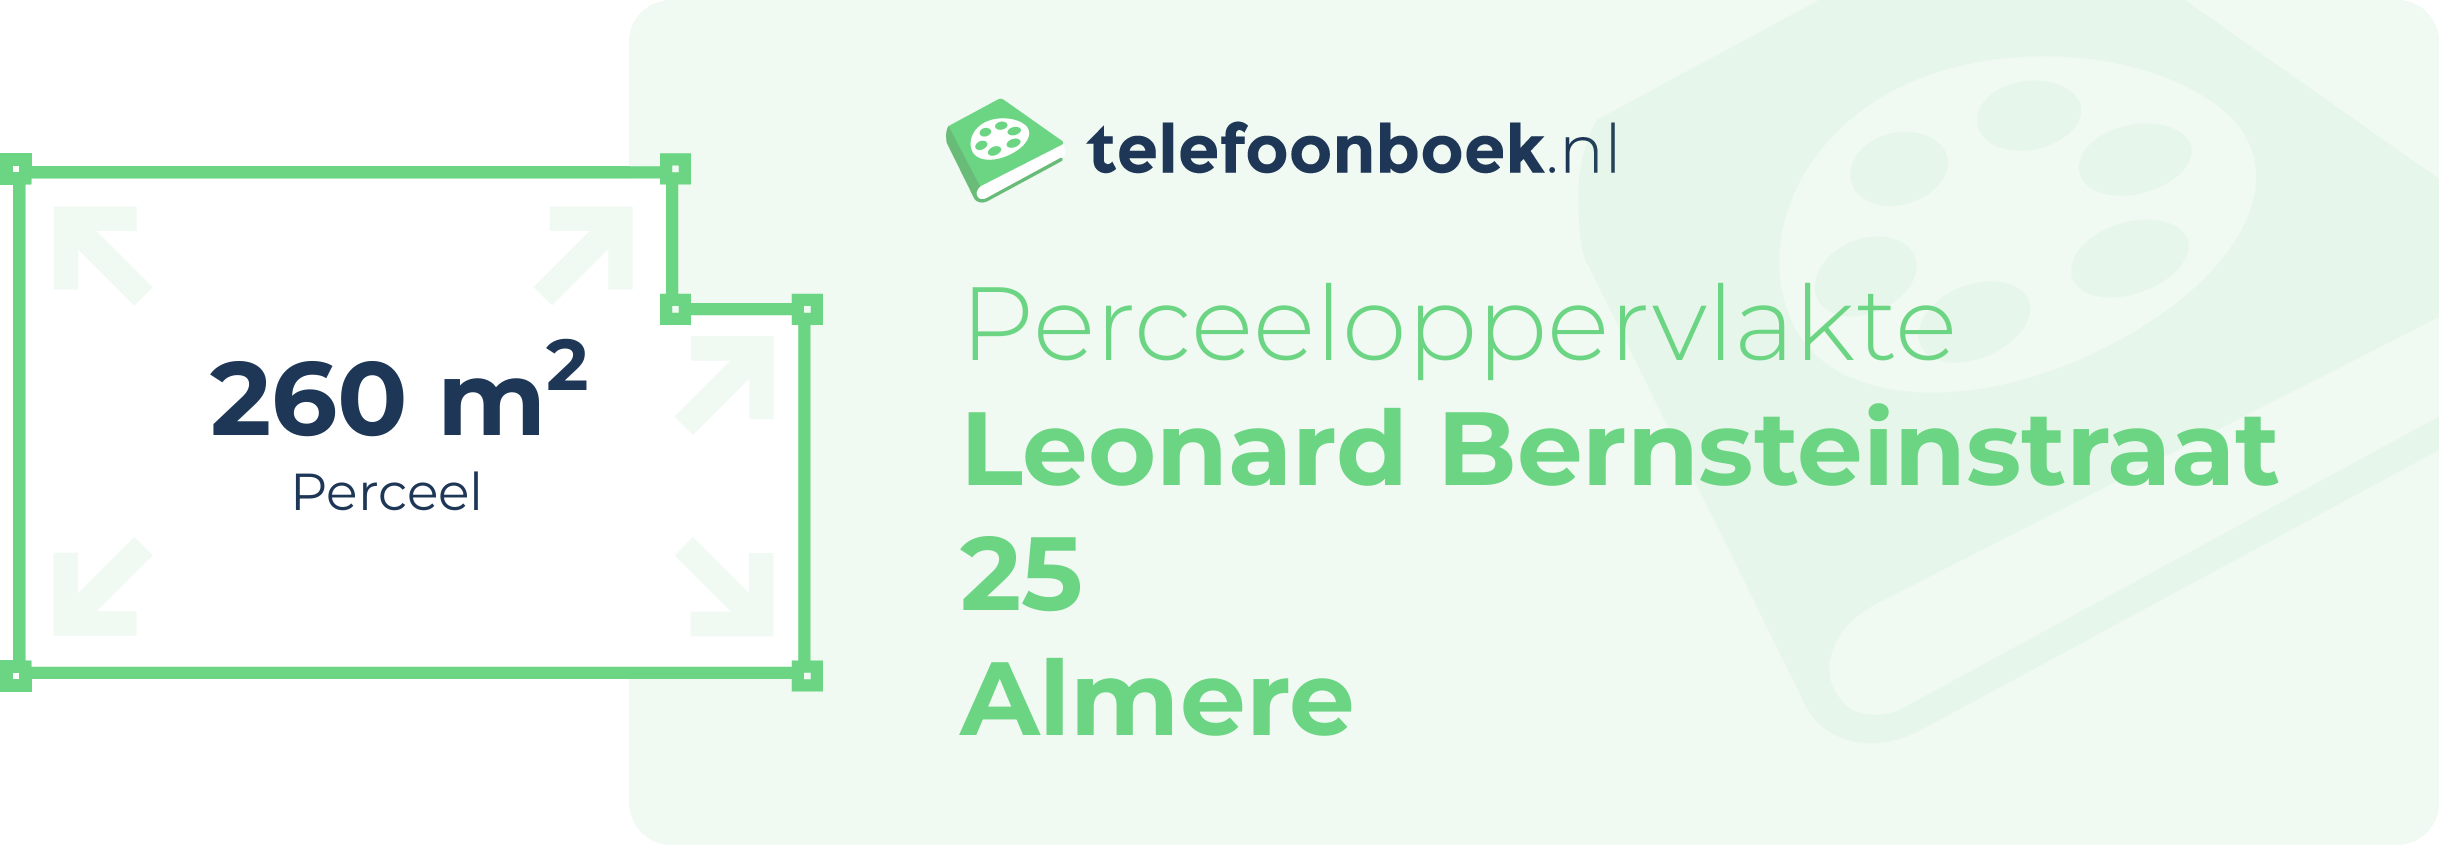 Perceeloppervlakte Leonard Bernsteinstraat 25 Almere